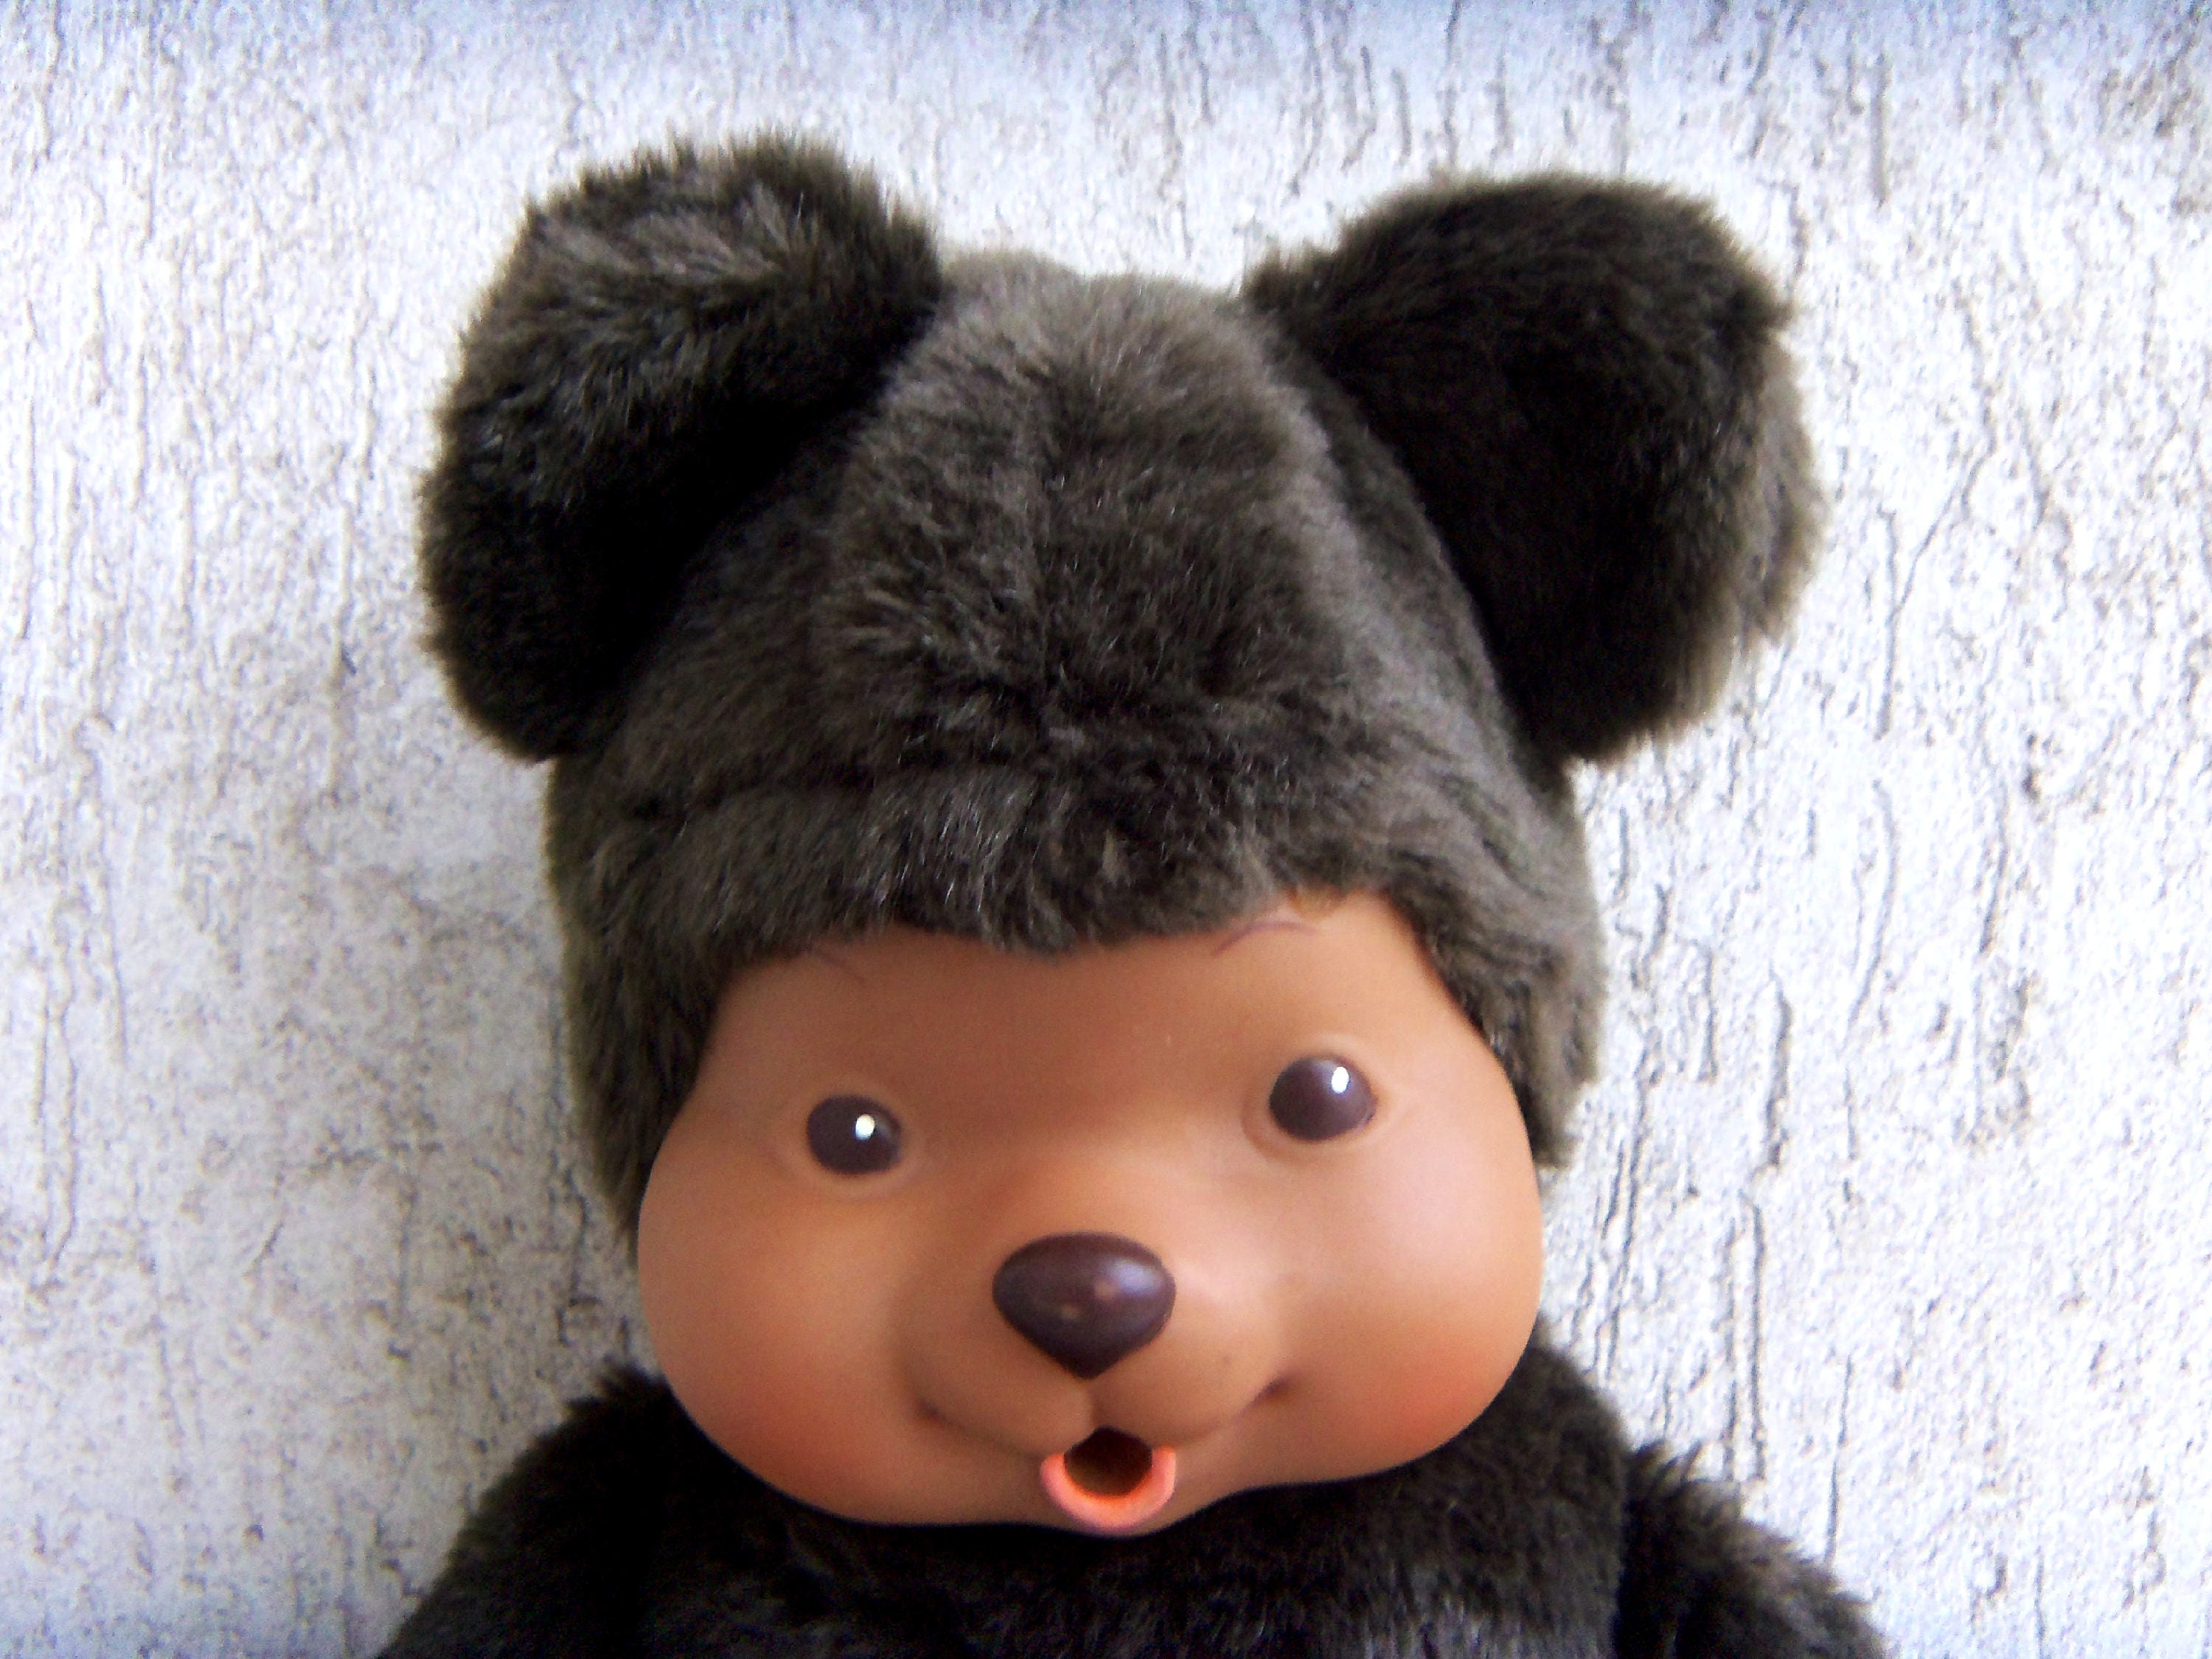 Mon kiki adoré  Teddy bear, Teddy, Animals